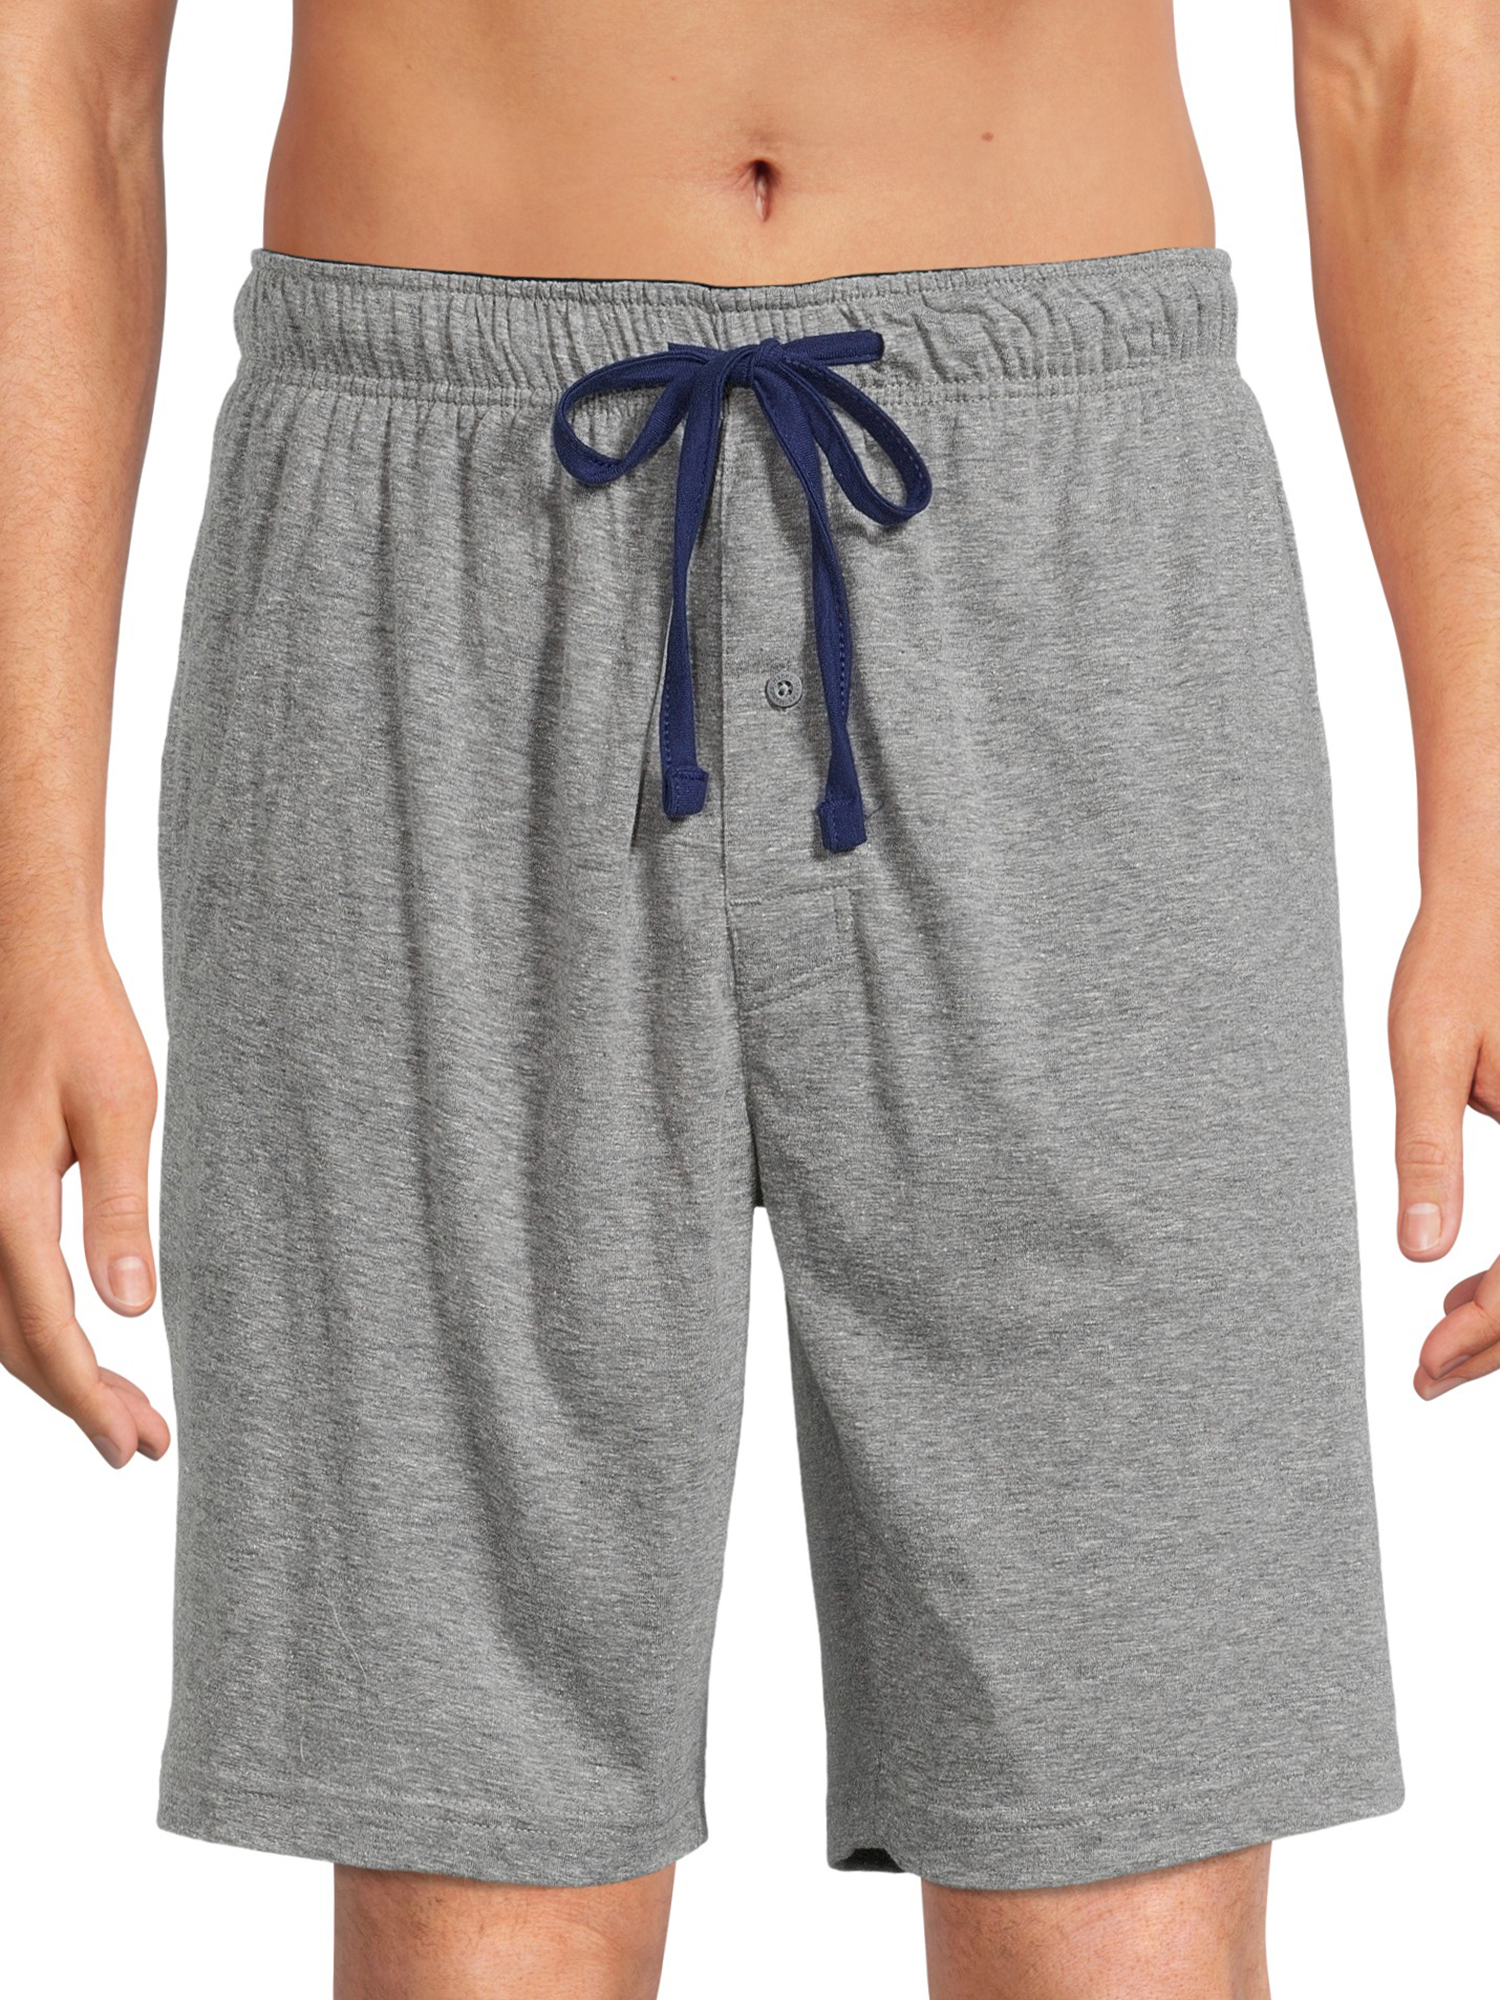 Hanes Men's and Big Men's X-temp Knit Jam Shorts, 2-Pack - image 2 of 3